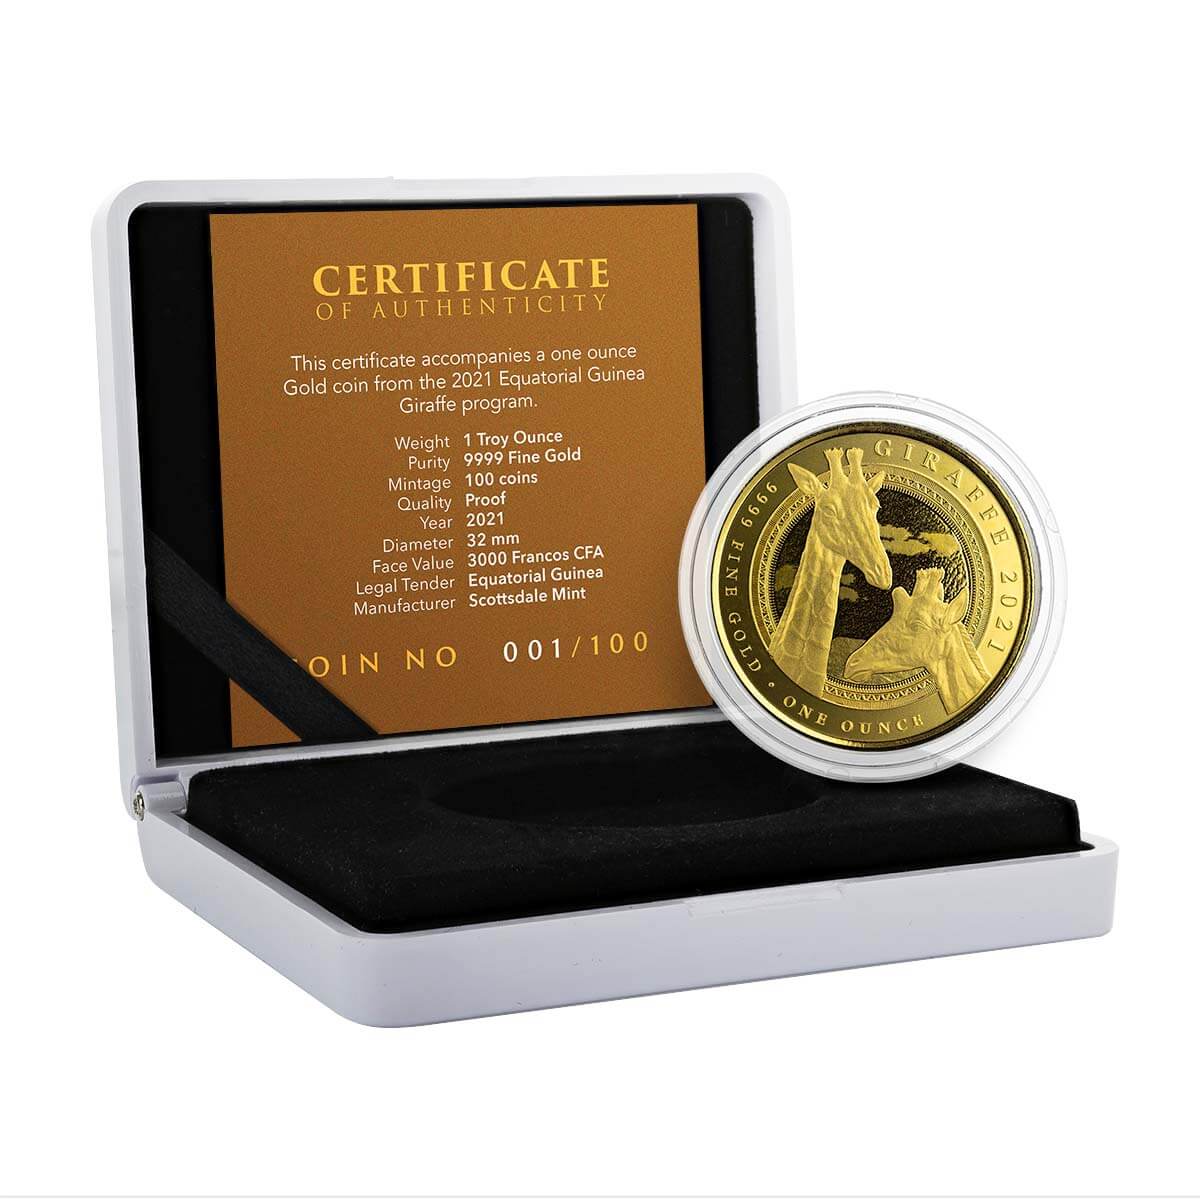 2021 Equatorial Guinea Giraffe 1 oz Gold Coin Display box